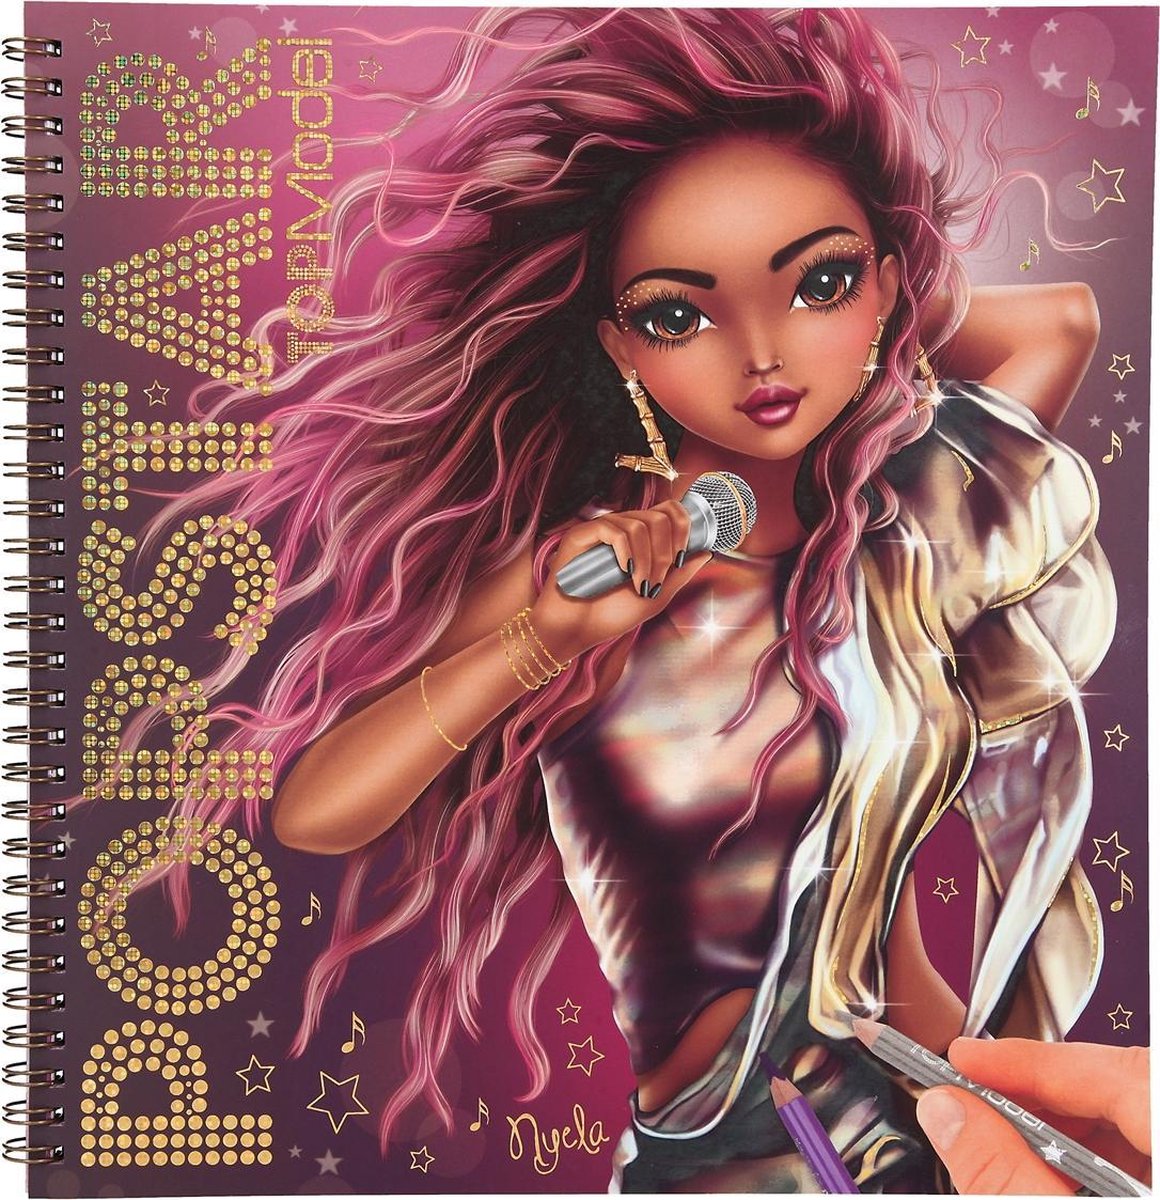 Top Model - Colouring Book - Popstar (0411462)